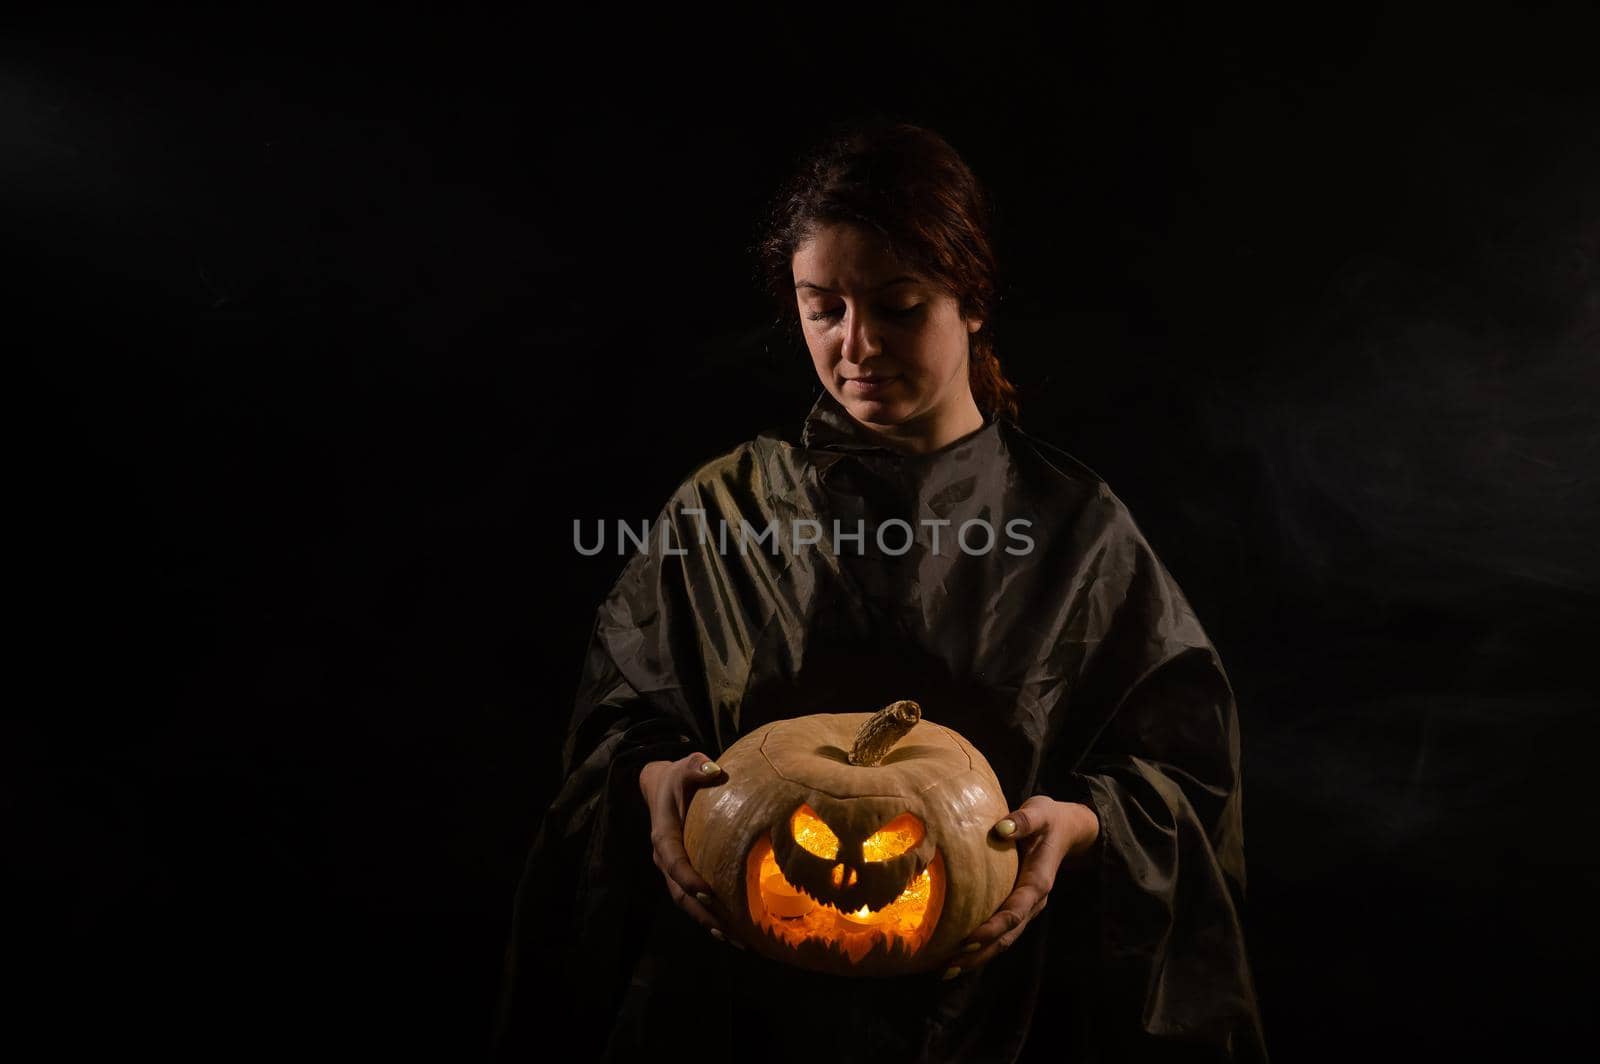 Caucasian woman holding pumpkin in the dark.